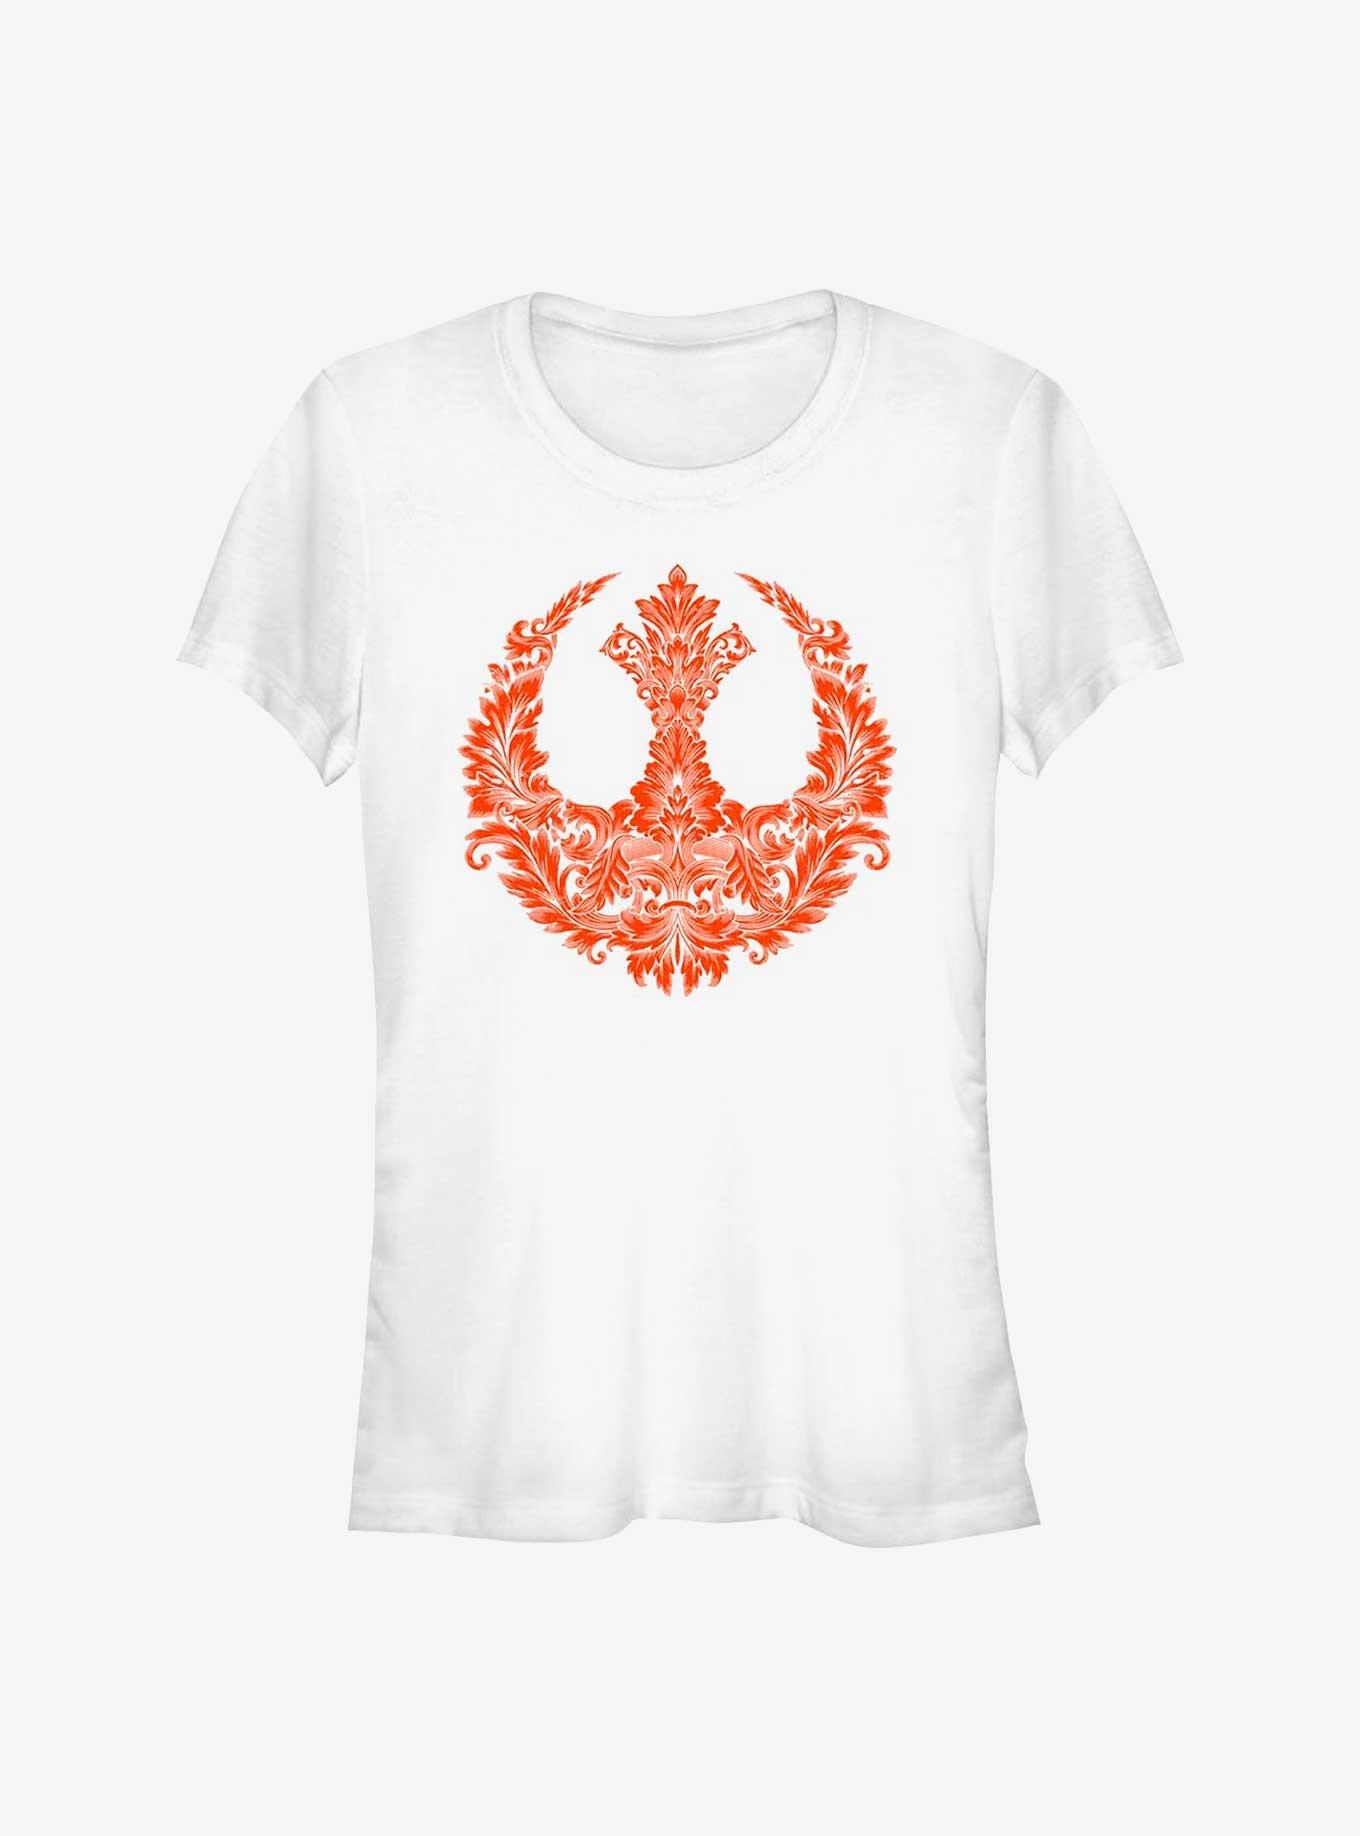 Star Wars Rebel Floral Symbol Girls T-Shirt, WHITE, hi-res